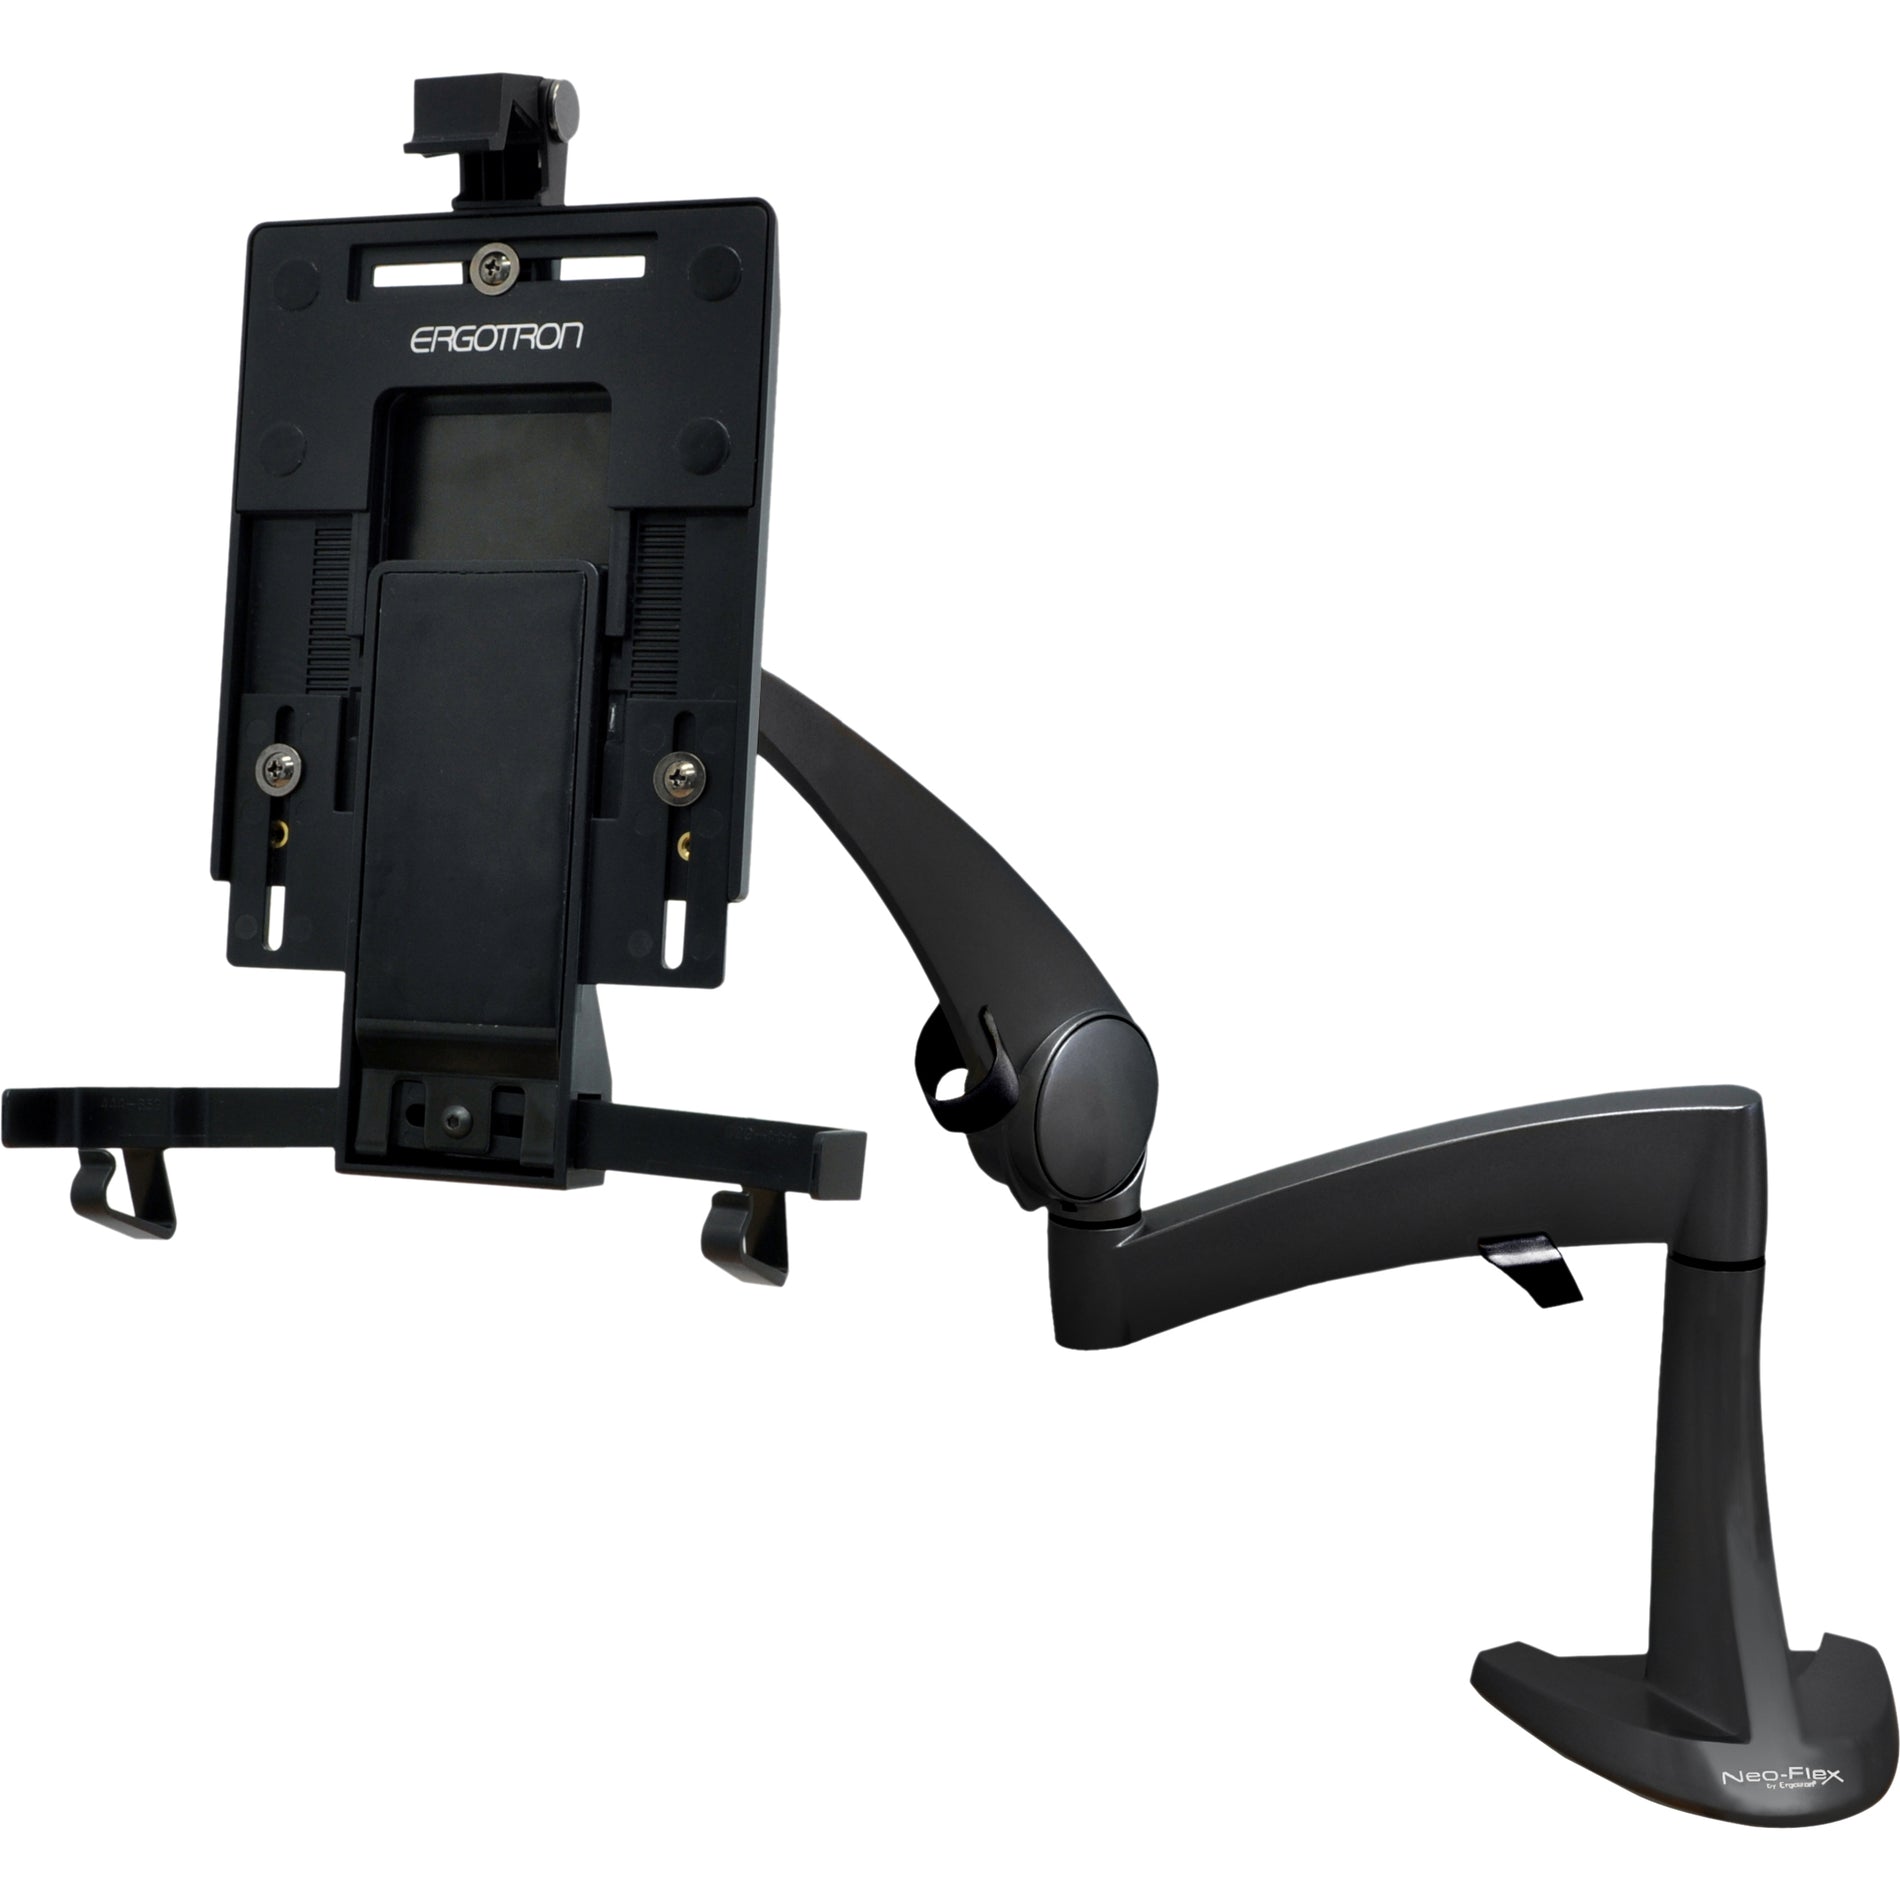 Ergotron 45-306-101 Neo-Flex Desk Mount Tablet Arm, Black - Adjustable, Secure, and Stable iPad Mount